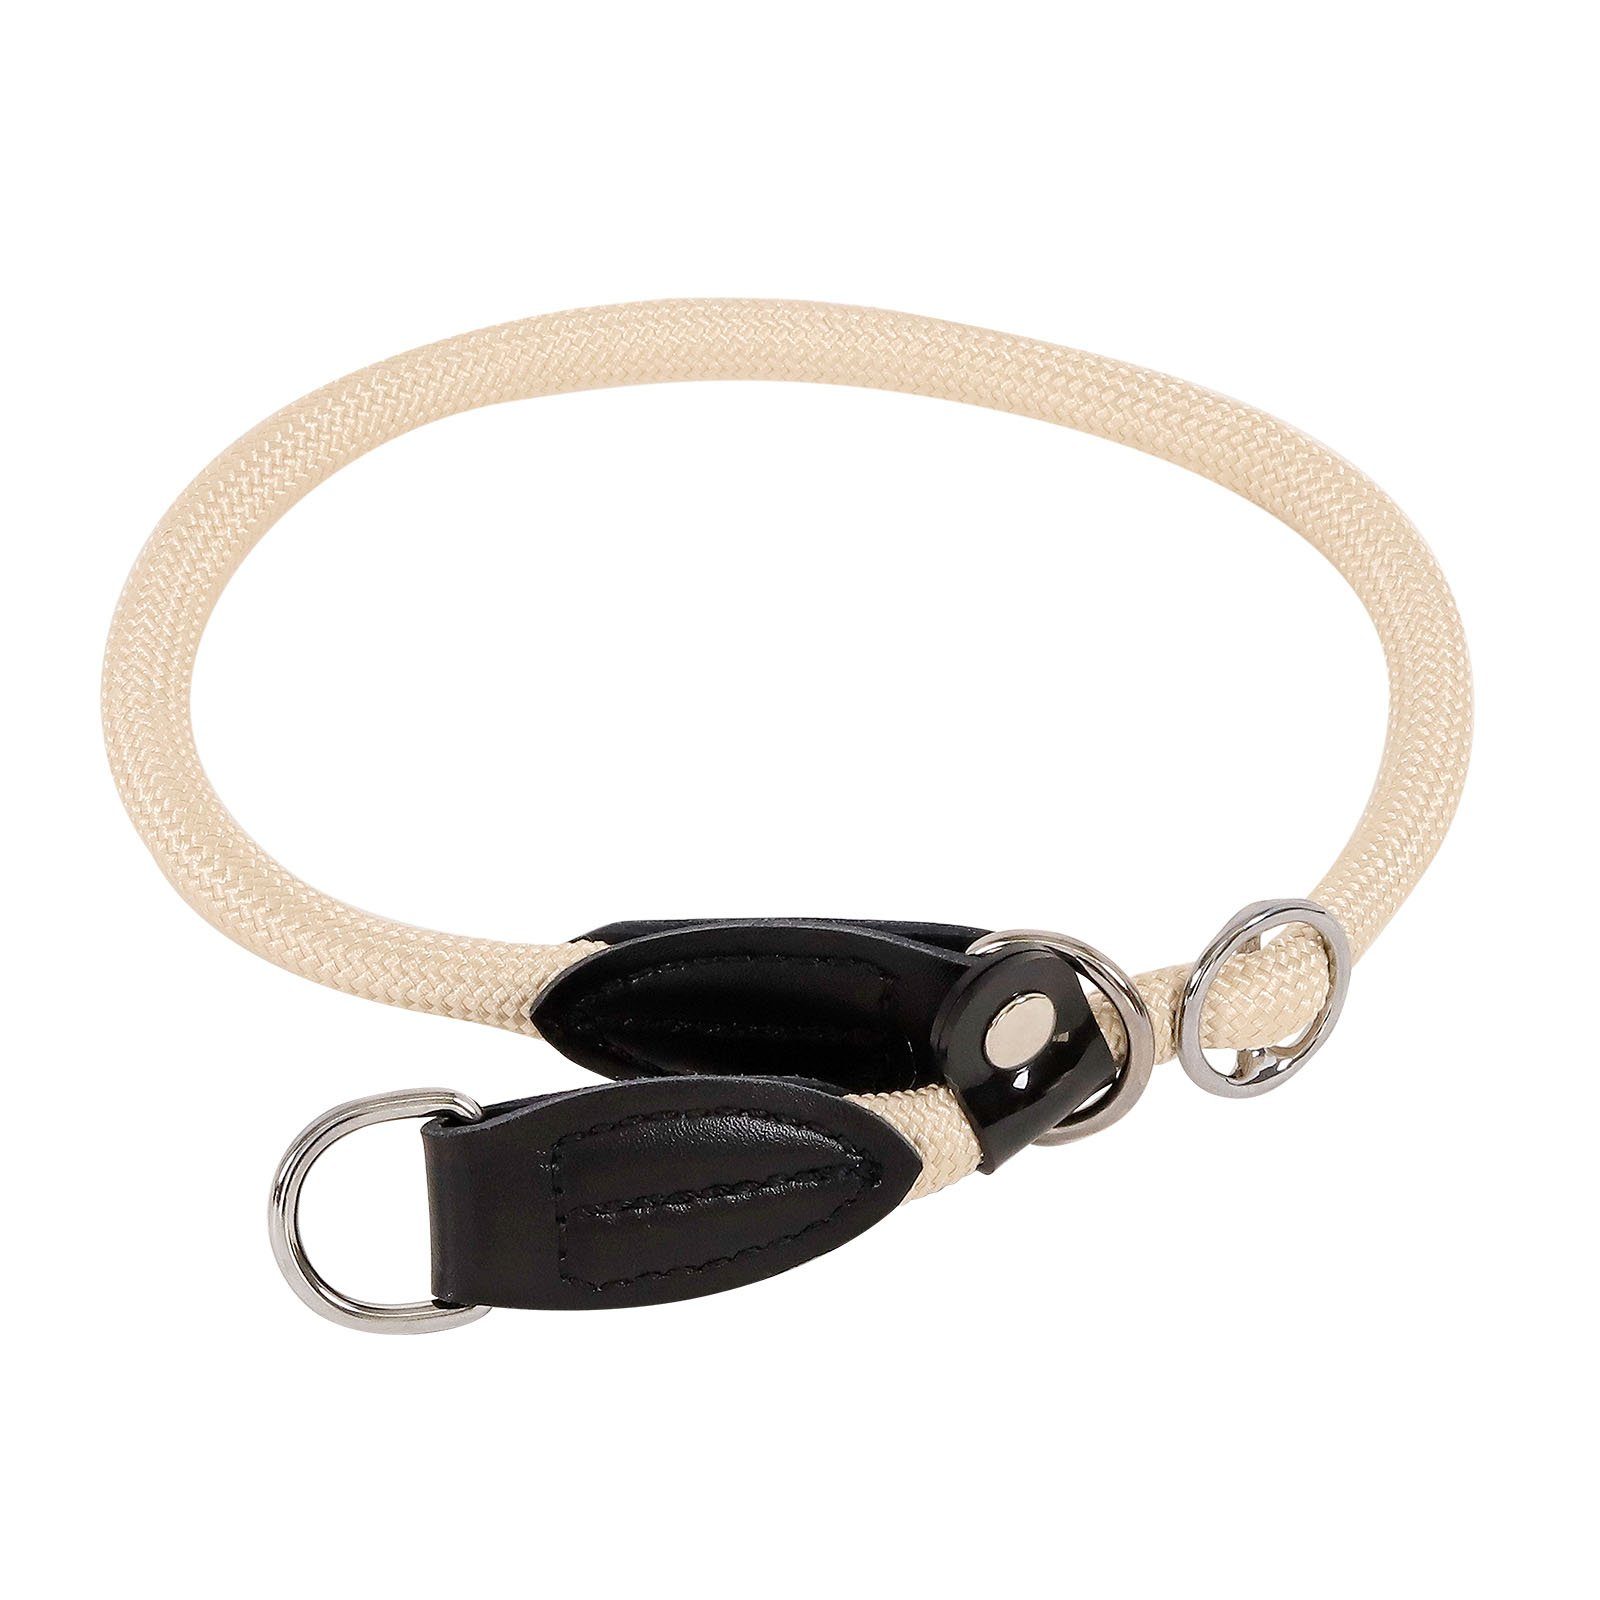 lionto Hunde-Halsband Hundehalsband mit Zugstopp, Retrieverhalsband, Nylon, 30 cm, beige